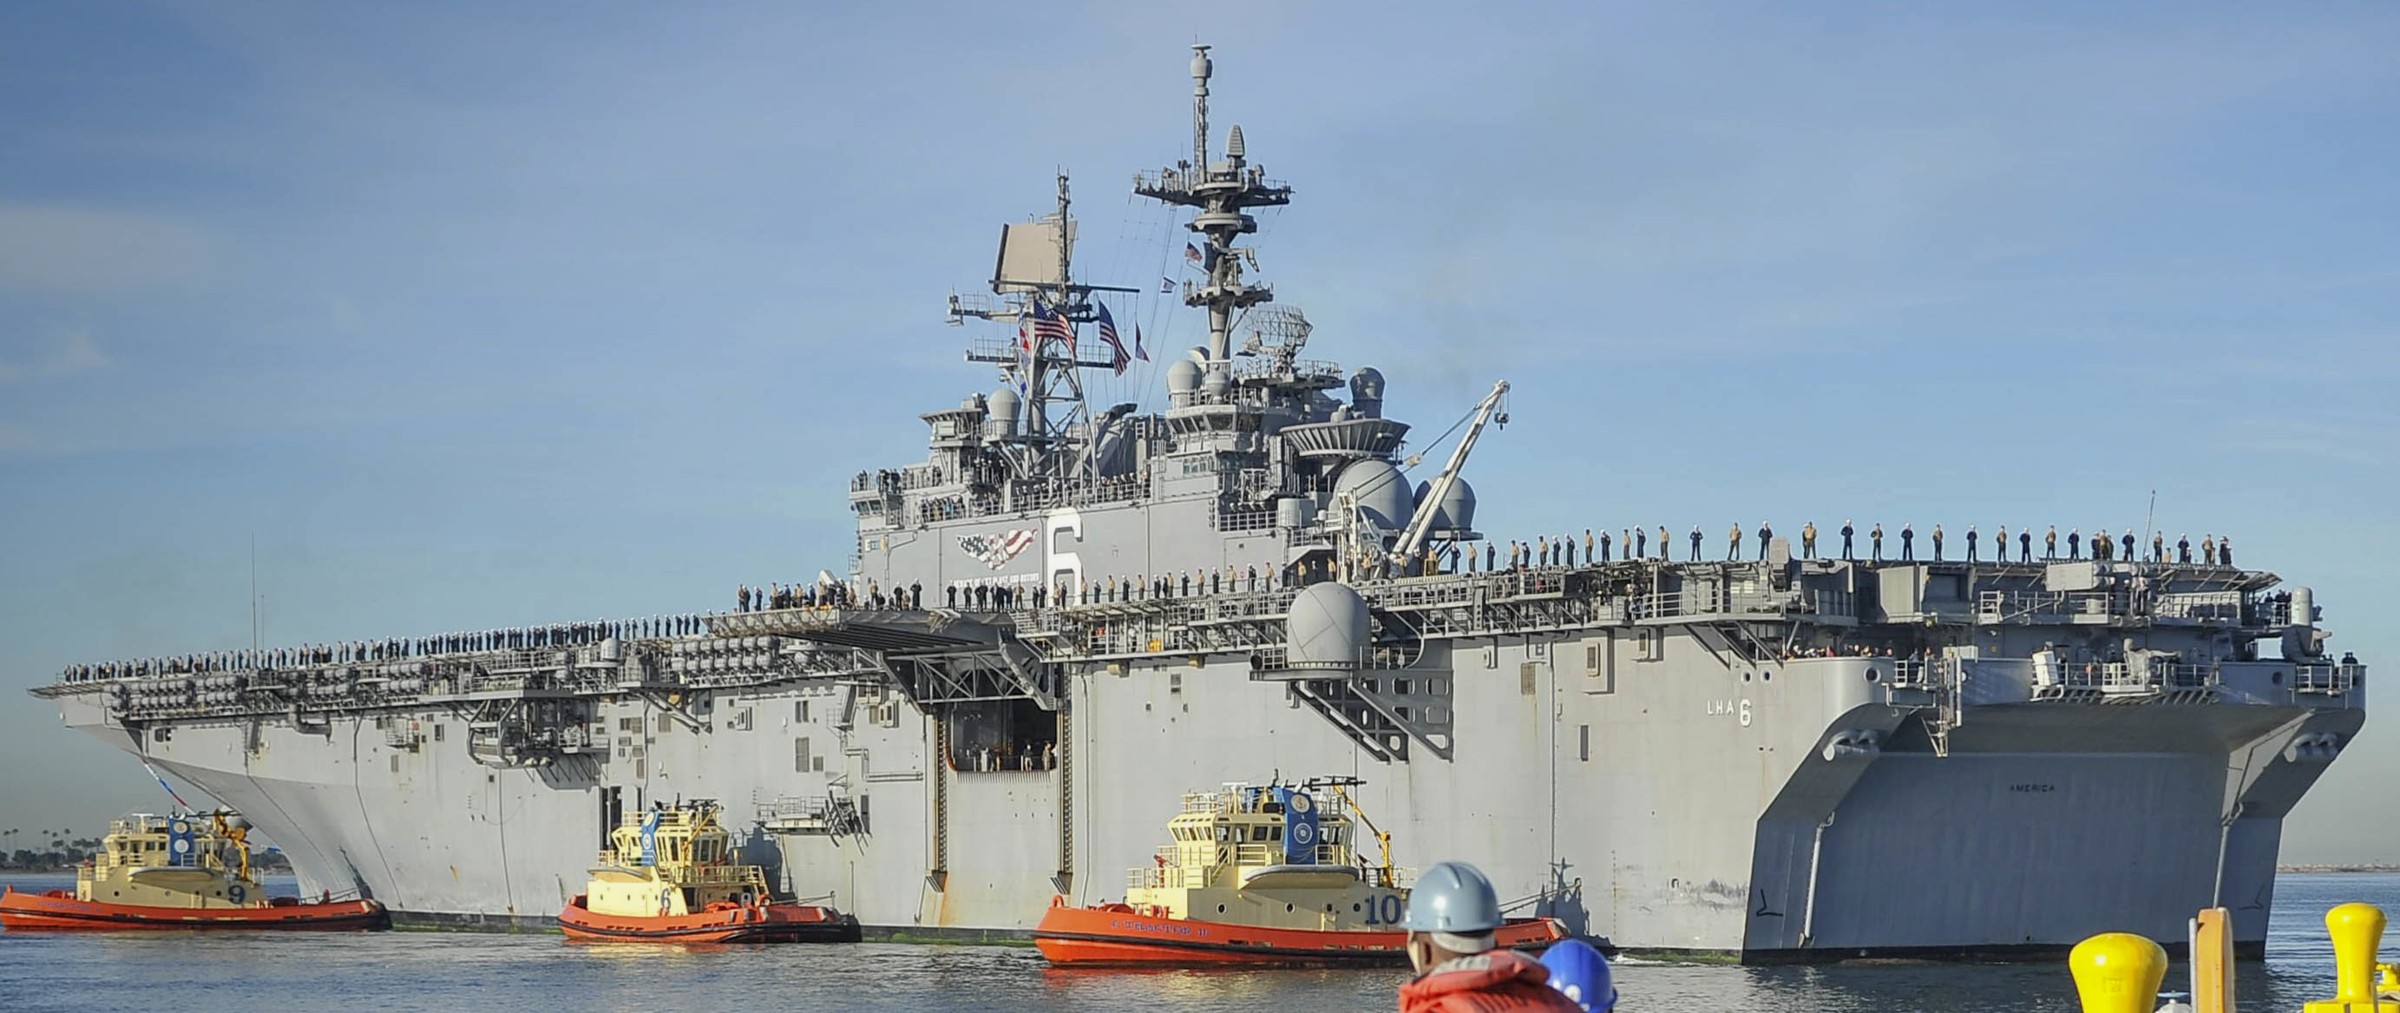 lha-6 uss america amphibious assault ship landing us navy returning san diego 96